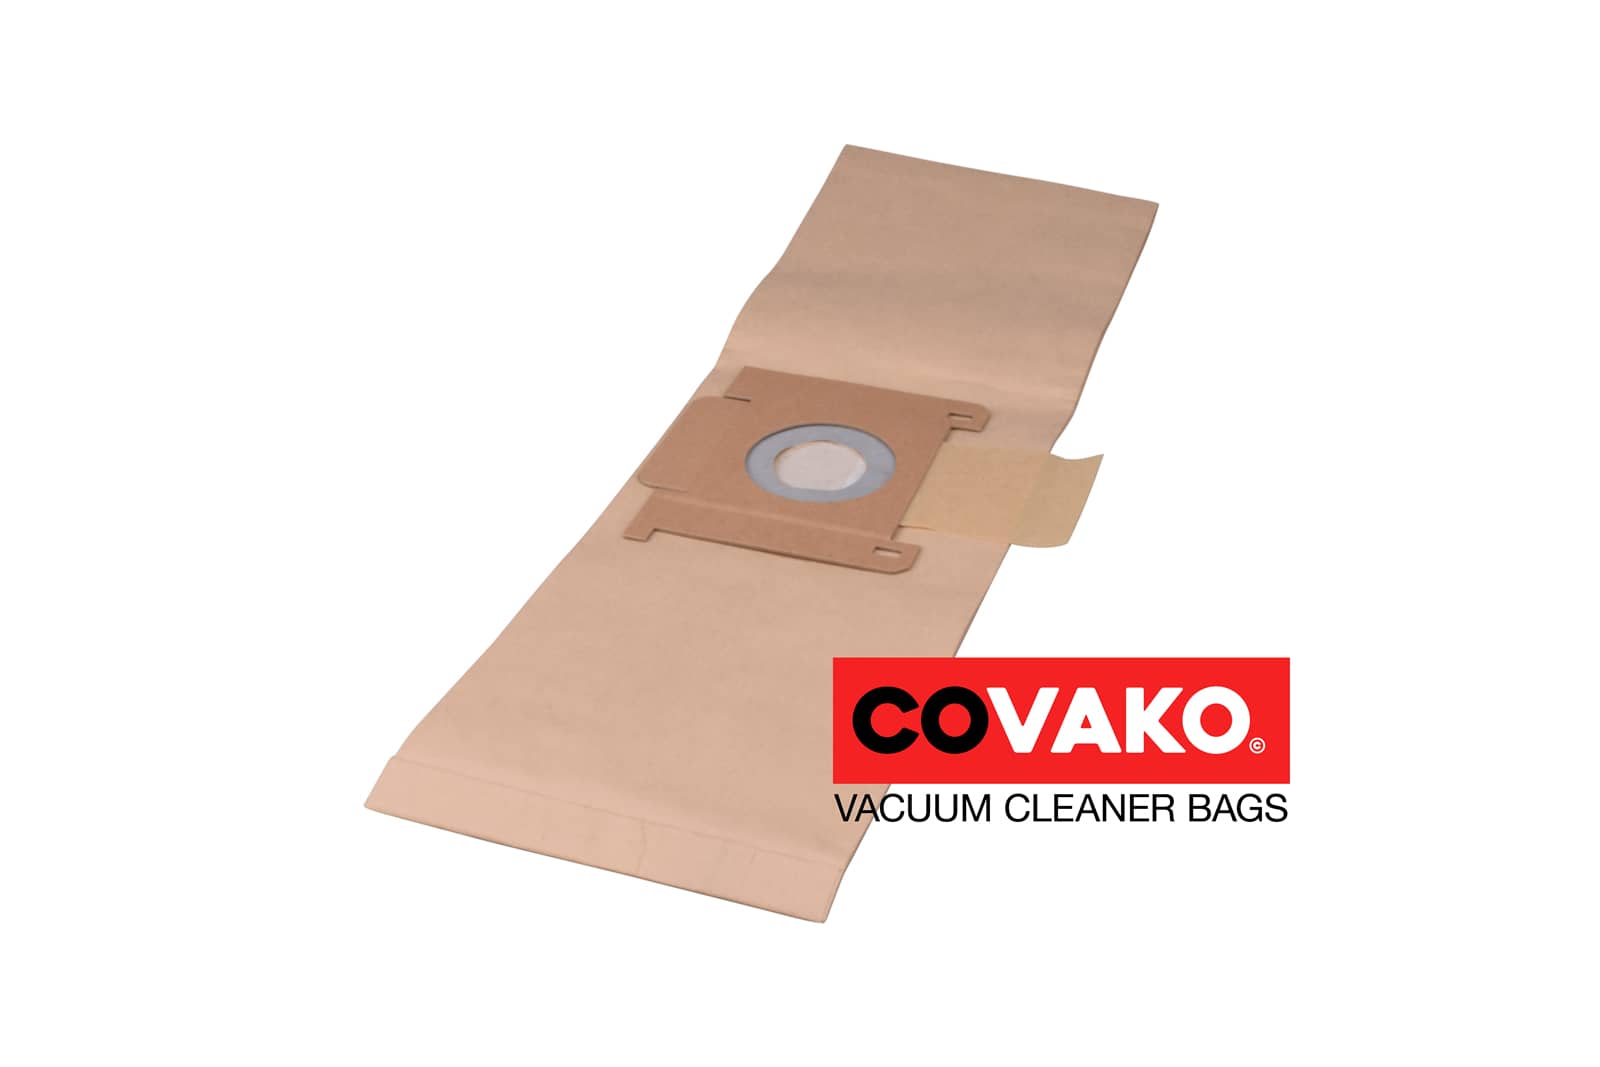 Clean a la Card C 06 / Paper - Clean a la Card vacuum cleaner bags